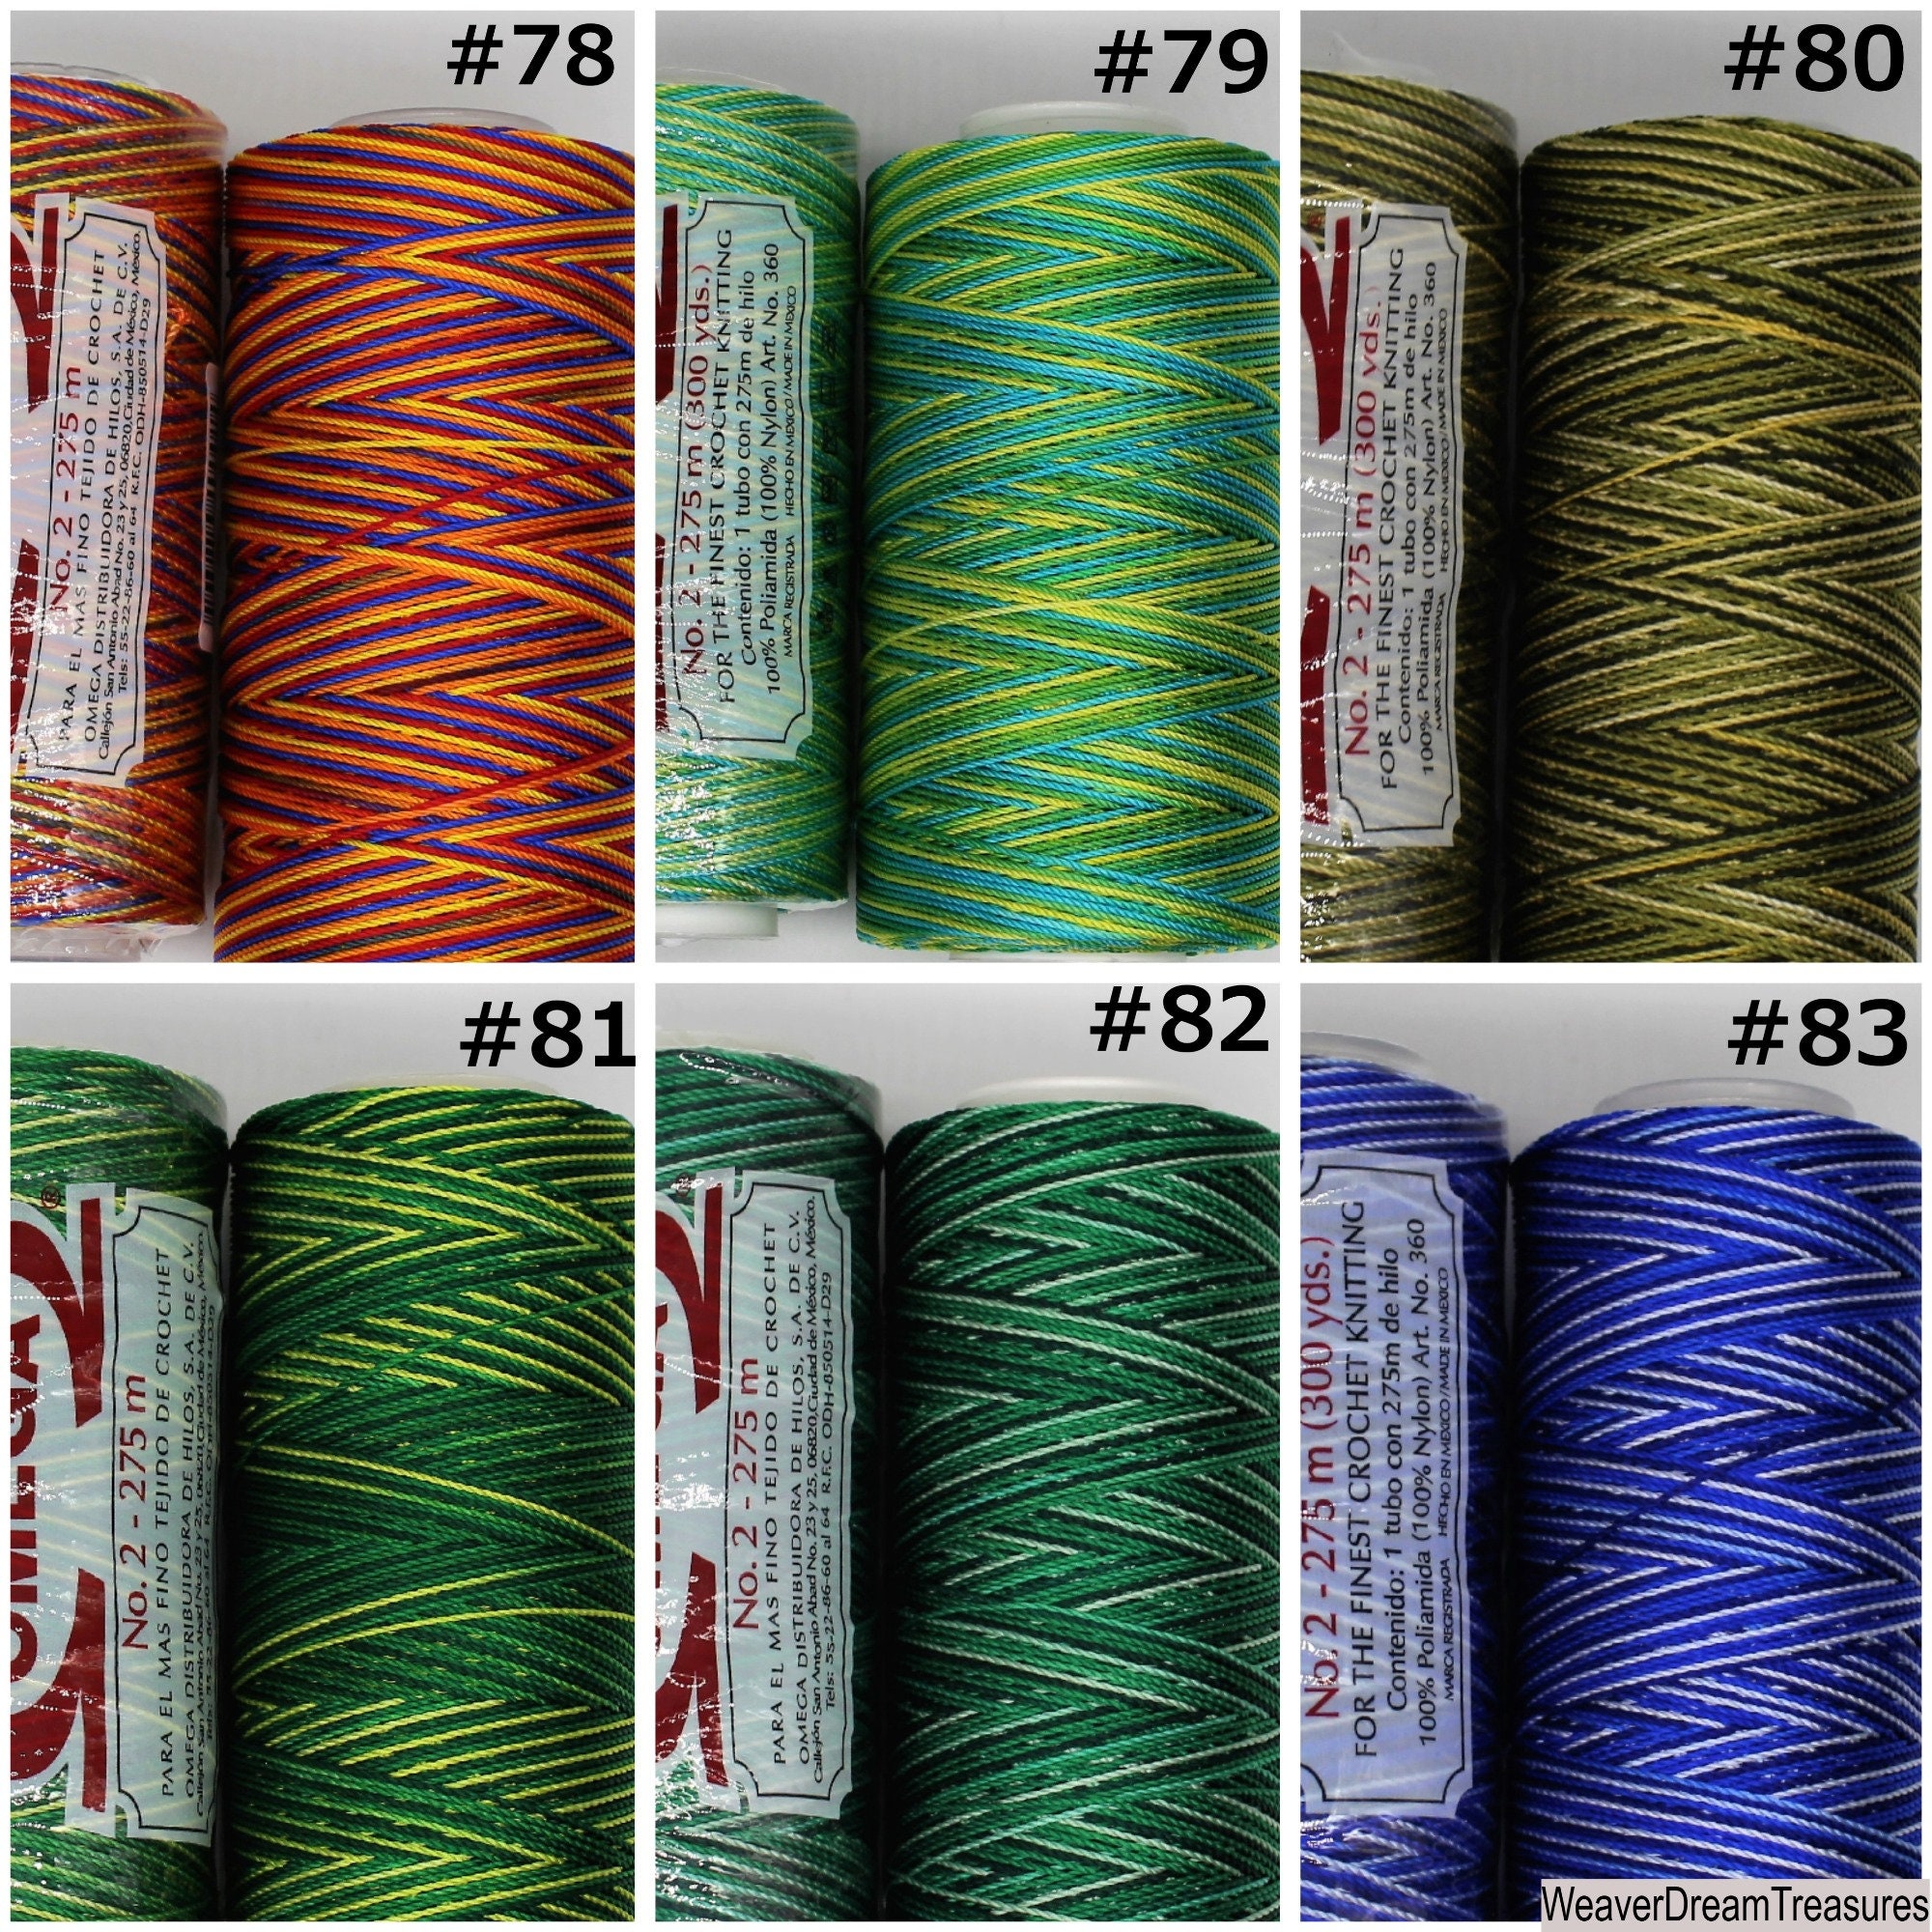  Espiga No. 9-100% Nylon Omega String Cord for Knitting and  Crochet - 75 Christmas